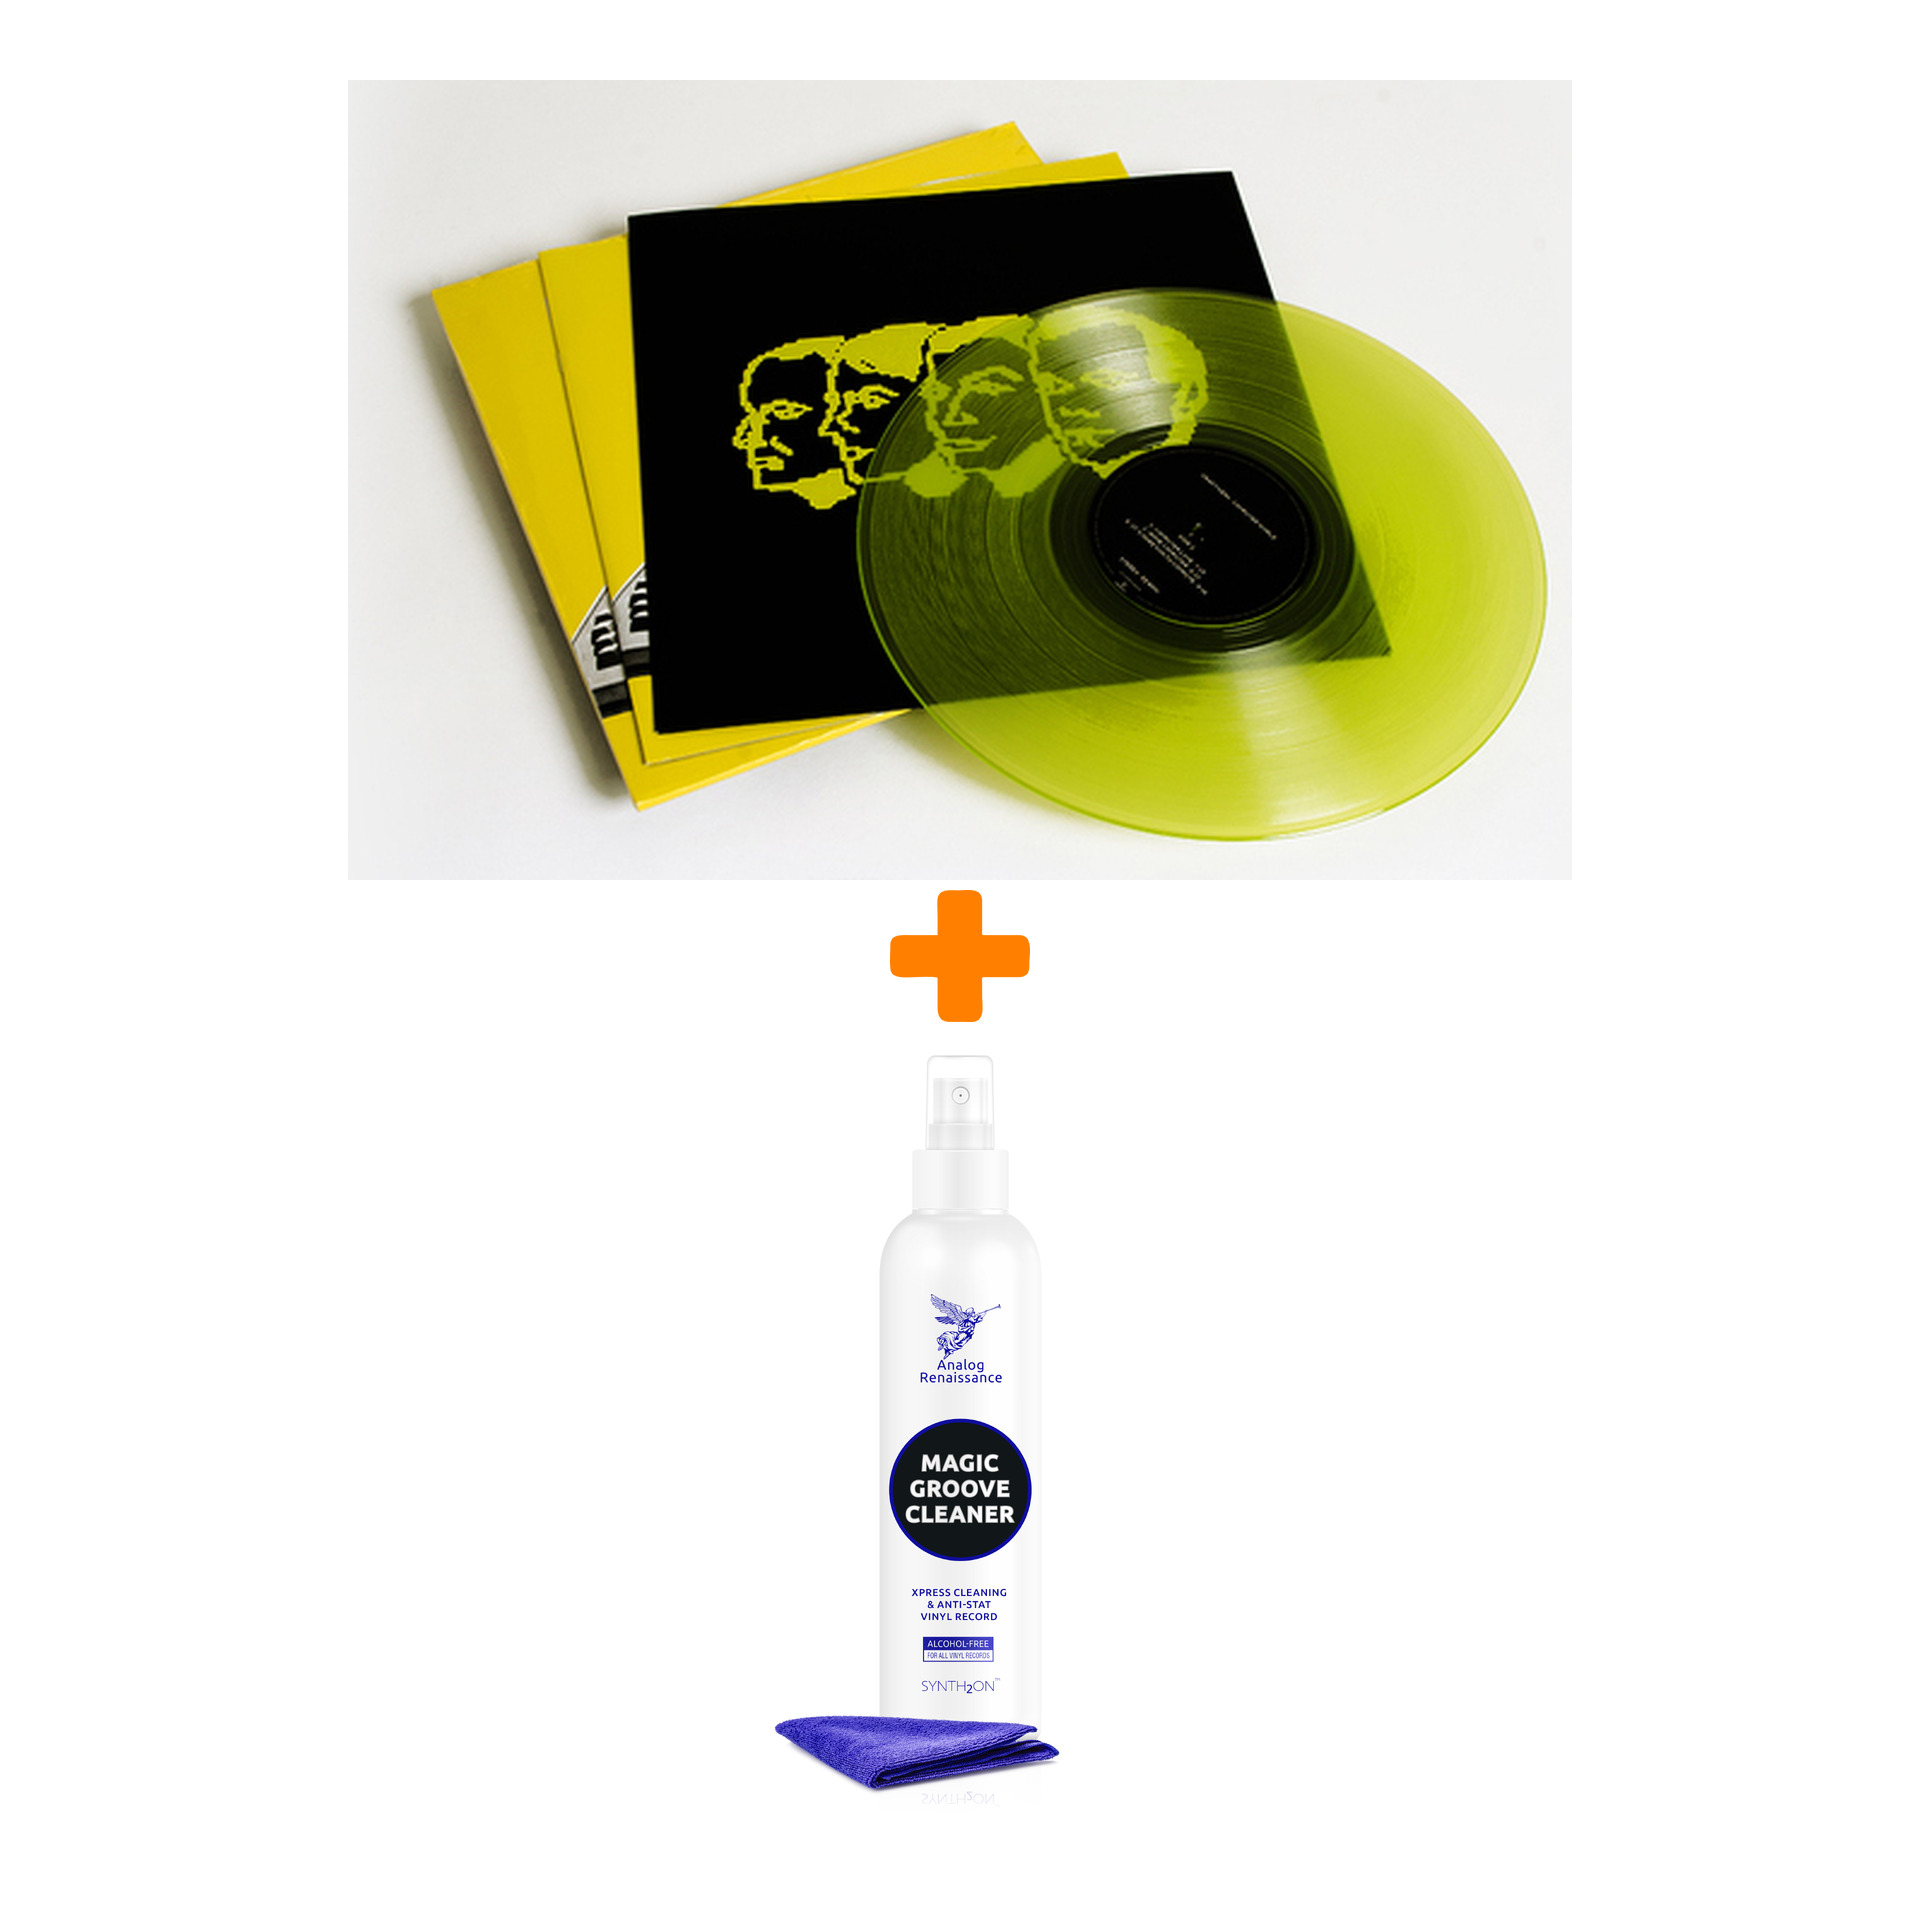 KRAFTWERK Computer World Coloured Neon Yellow Vinyl LP + Спрей для очистки LP с микрофиброй 250мл Набор